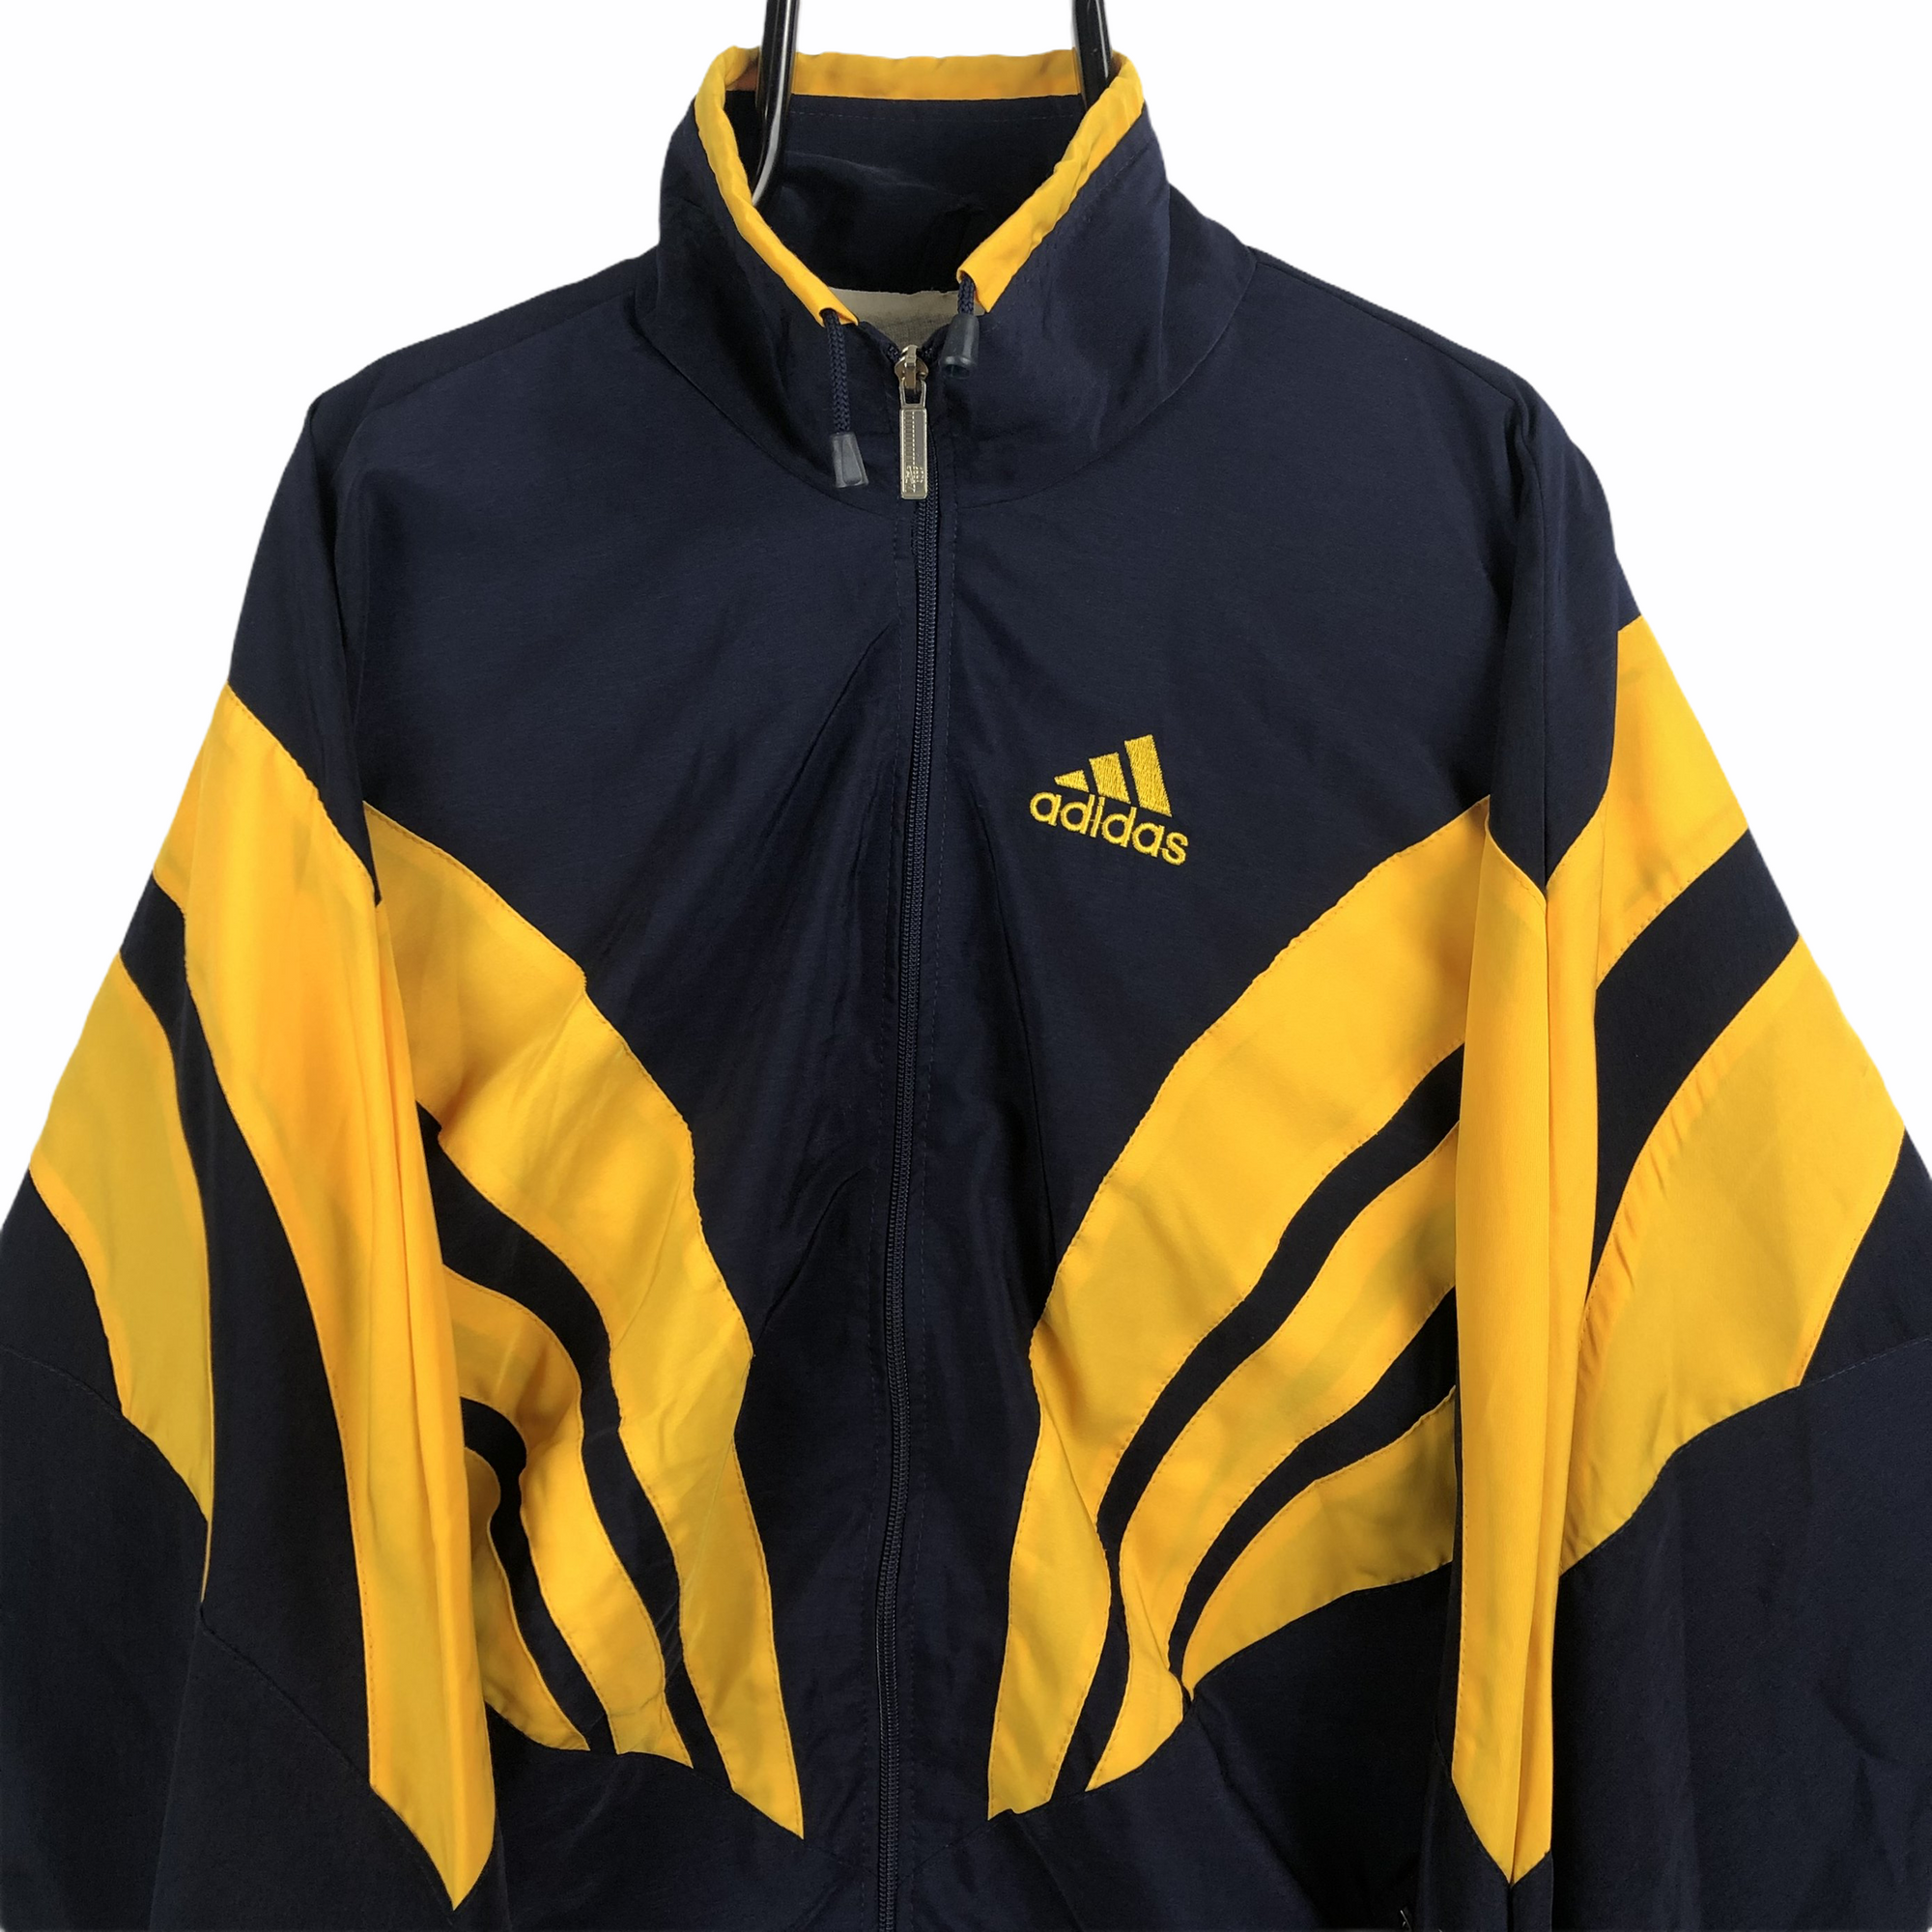 Vintage 90s Adidas Track Jacket in Navy & Yellow - Men's XL/Women's XXL